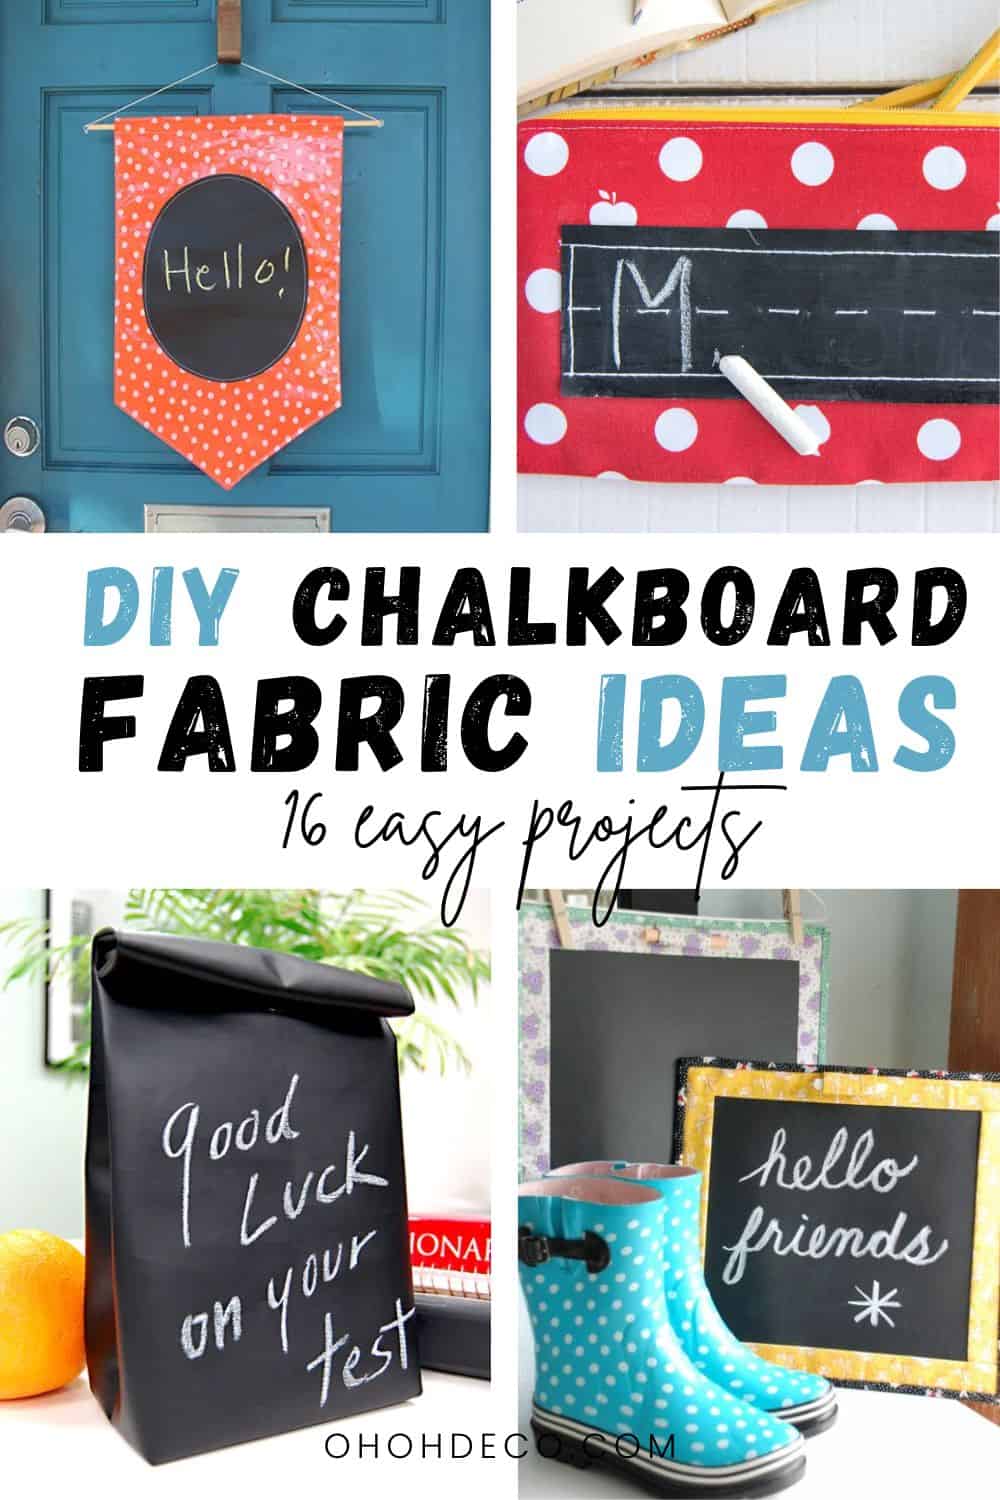 Chalkboard fabric ideas